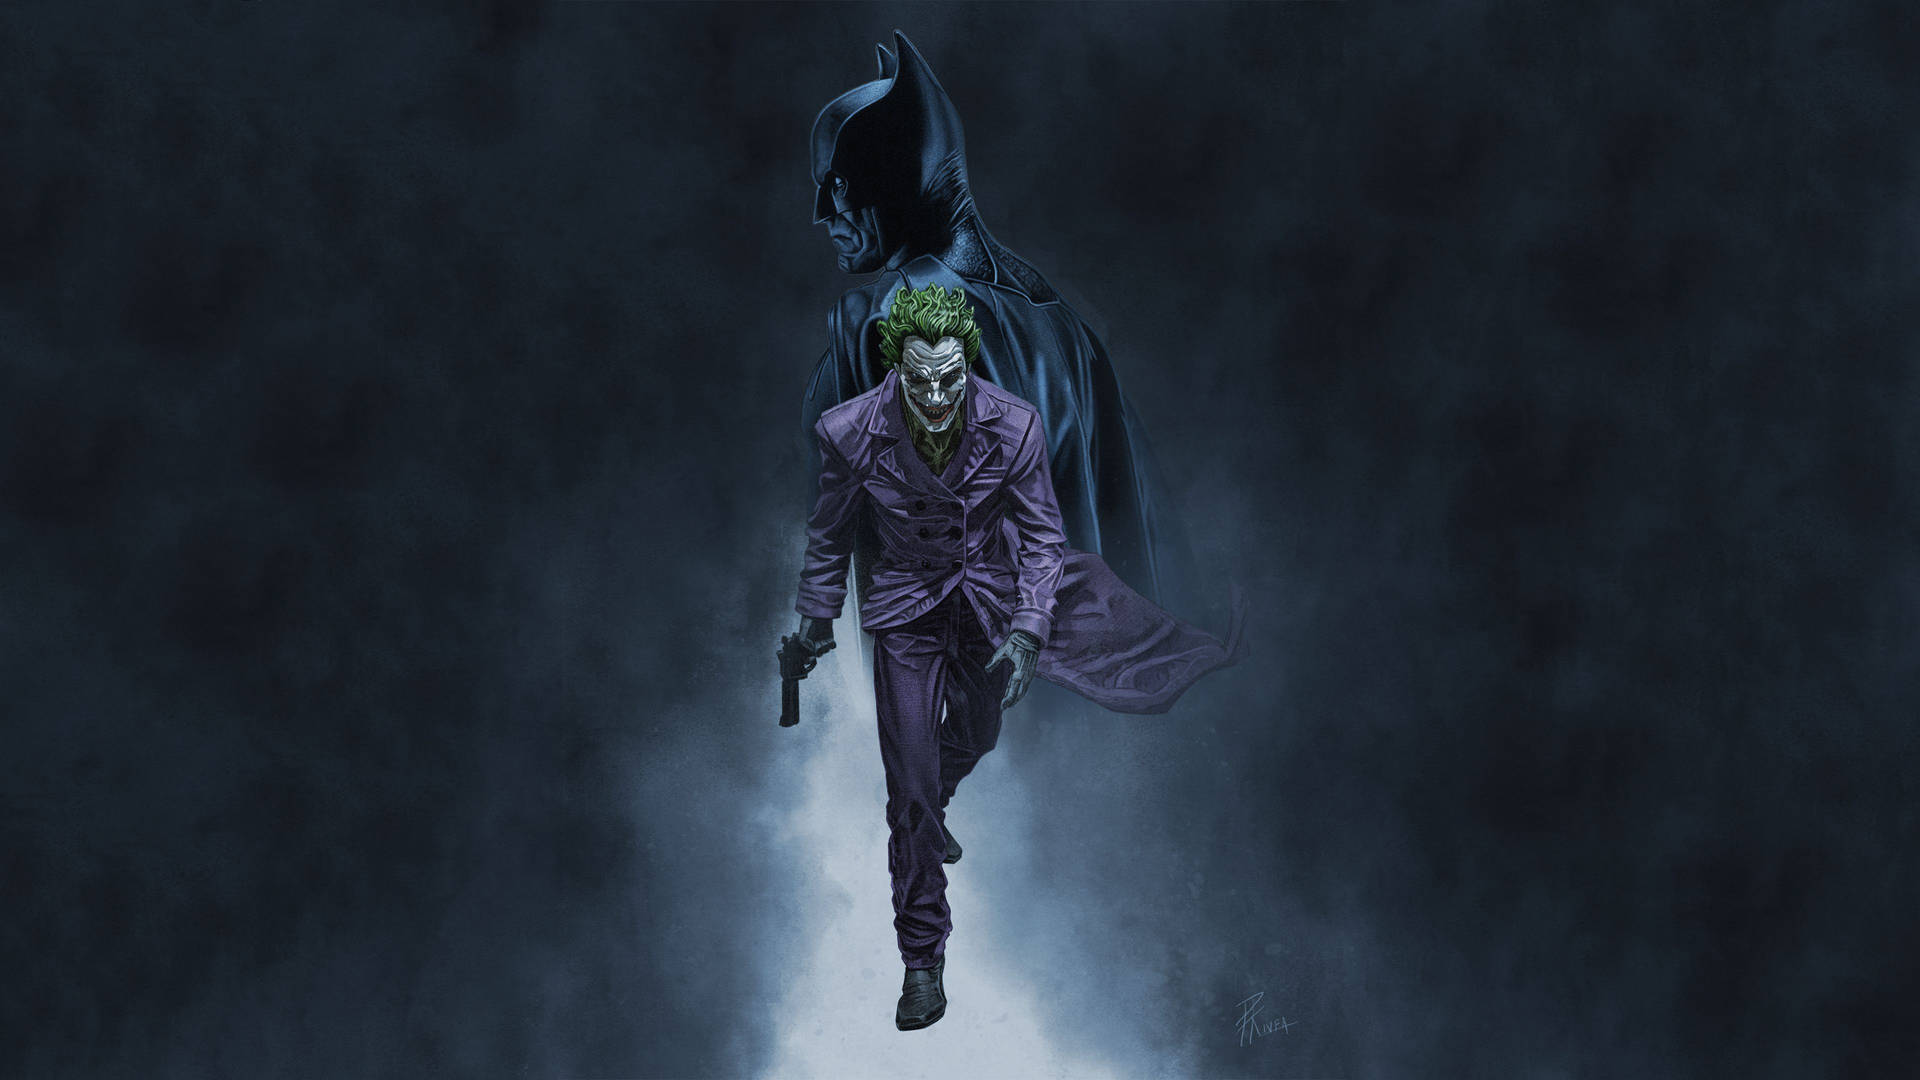 Black Ultra Hd Joker With Batman Looming